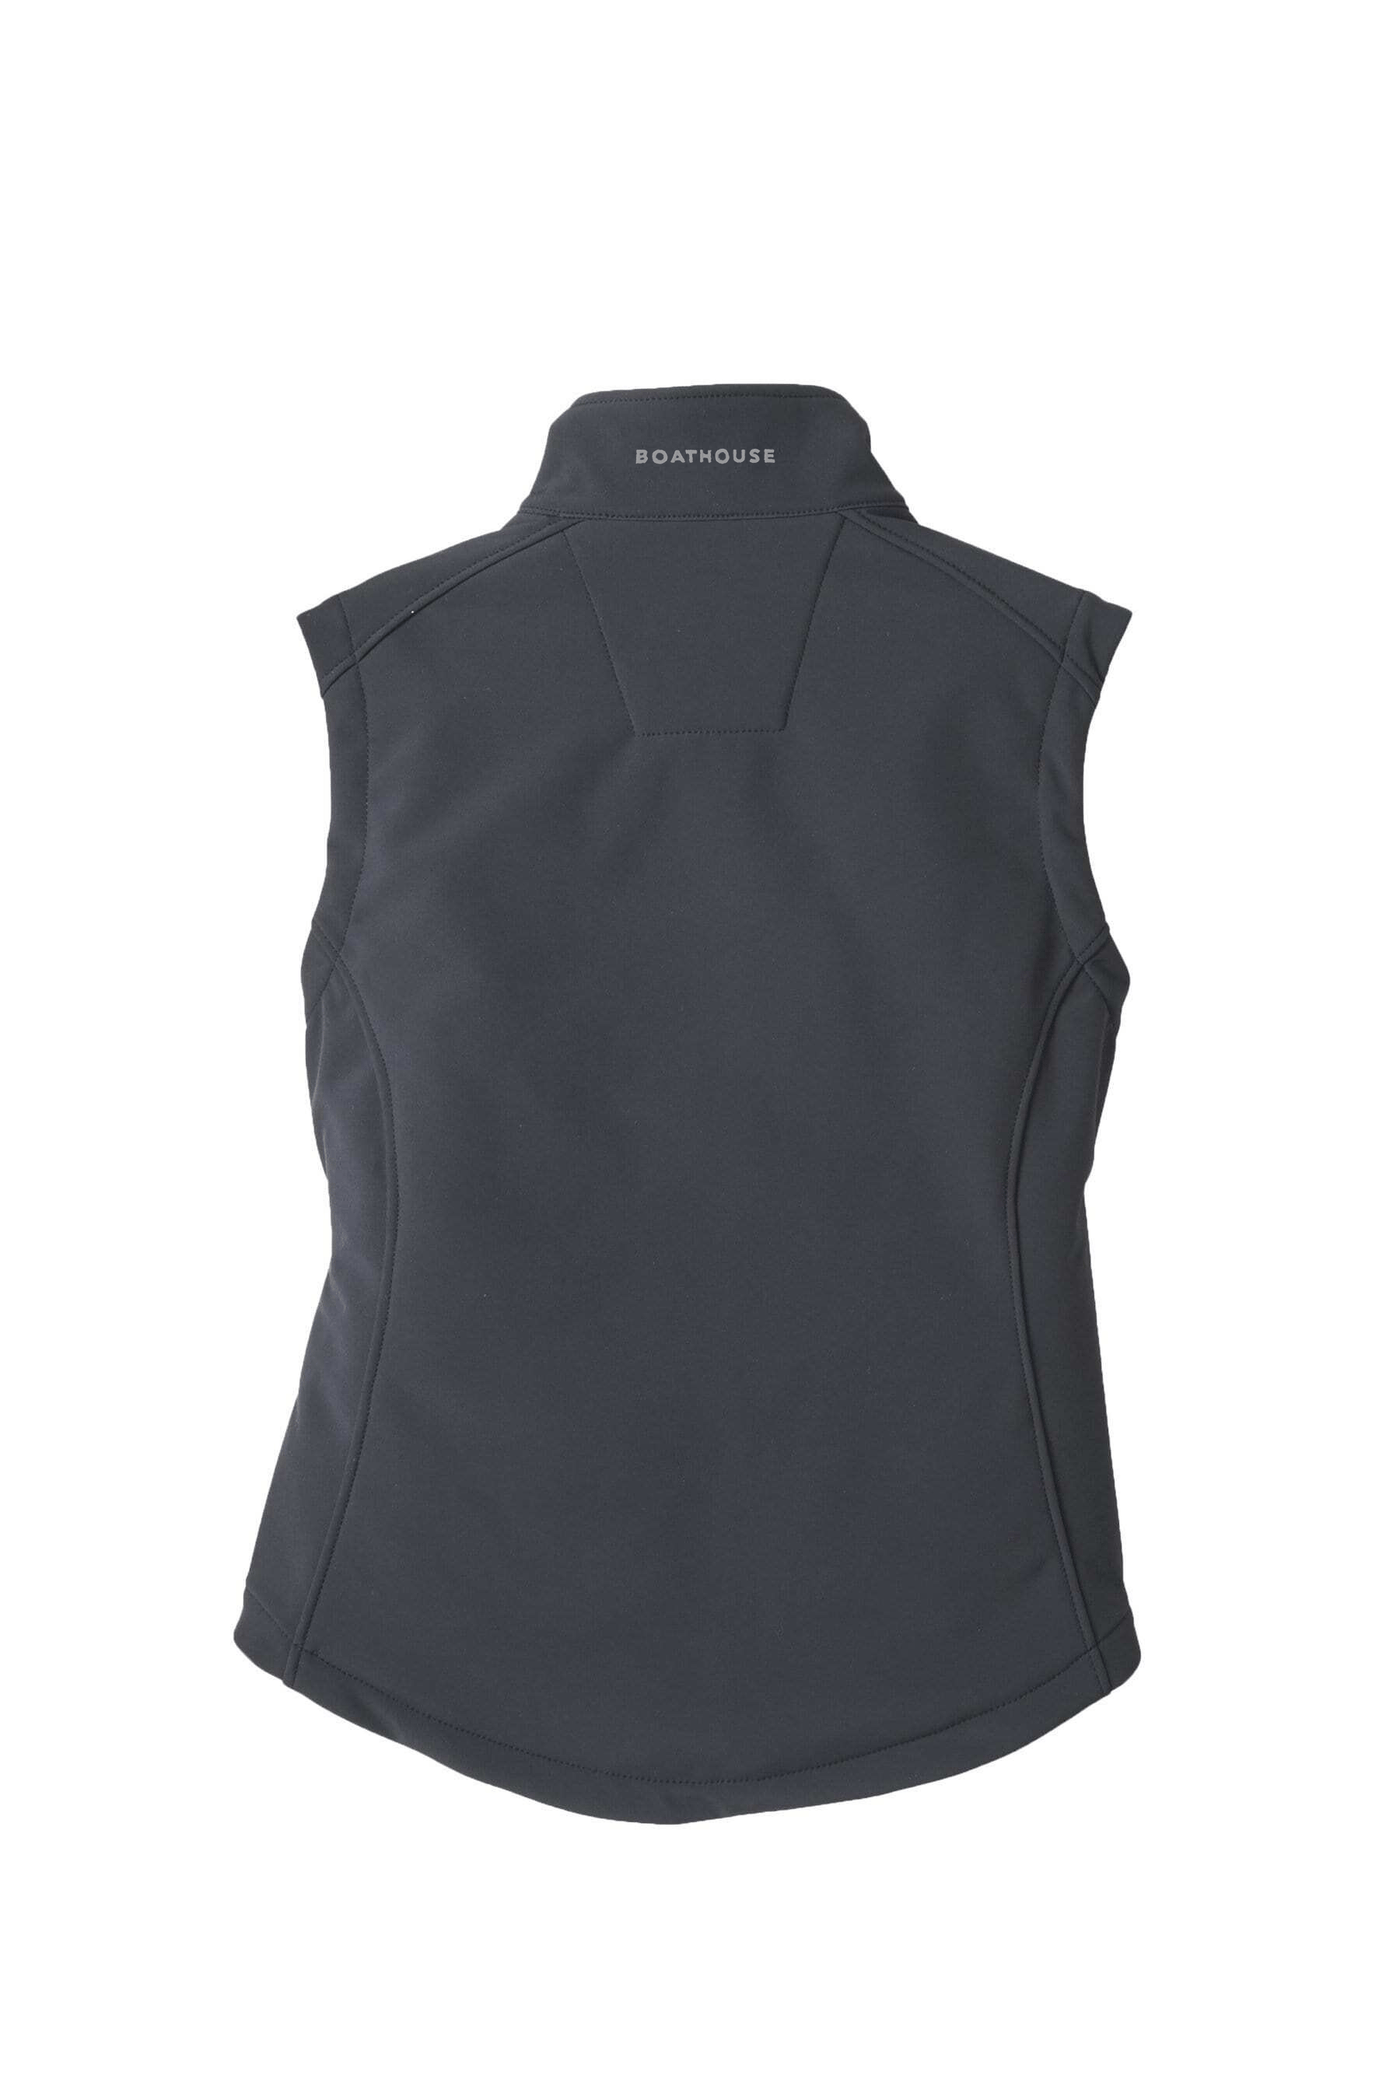 BOATHOUSE Women's Equinox Vest